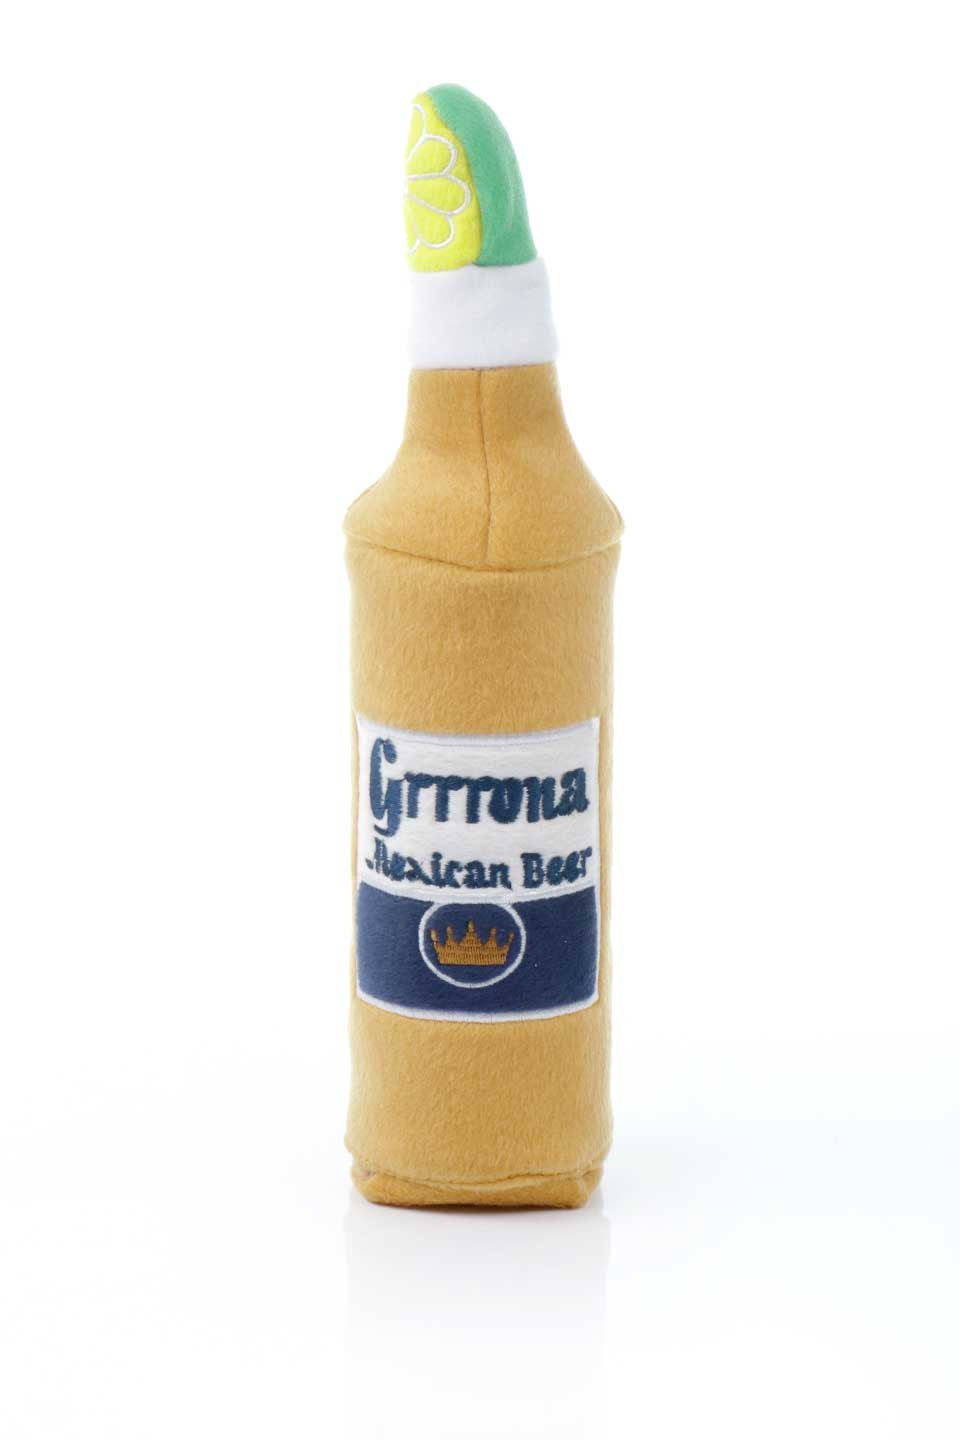 Grrrona Beer Water Bottle Crackler Toy コロナ瓶ペットボトル入り・パロディーぬいぐるみ